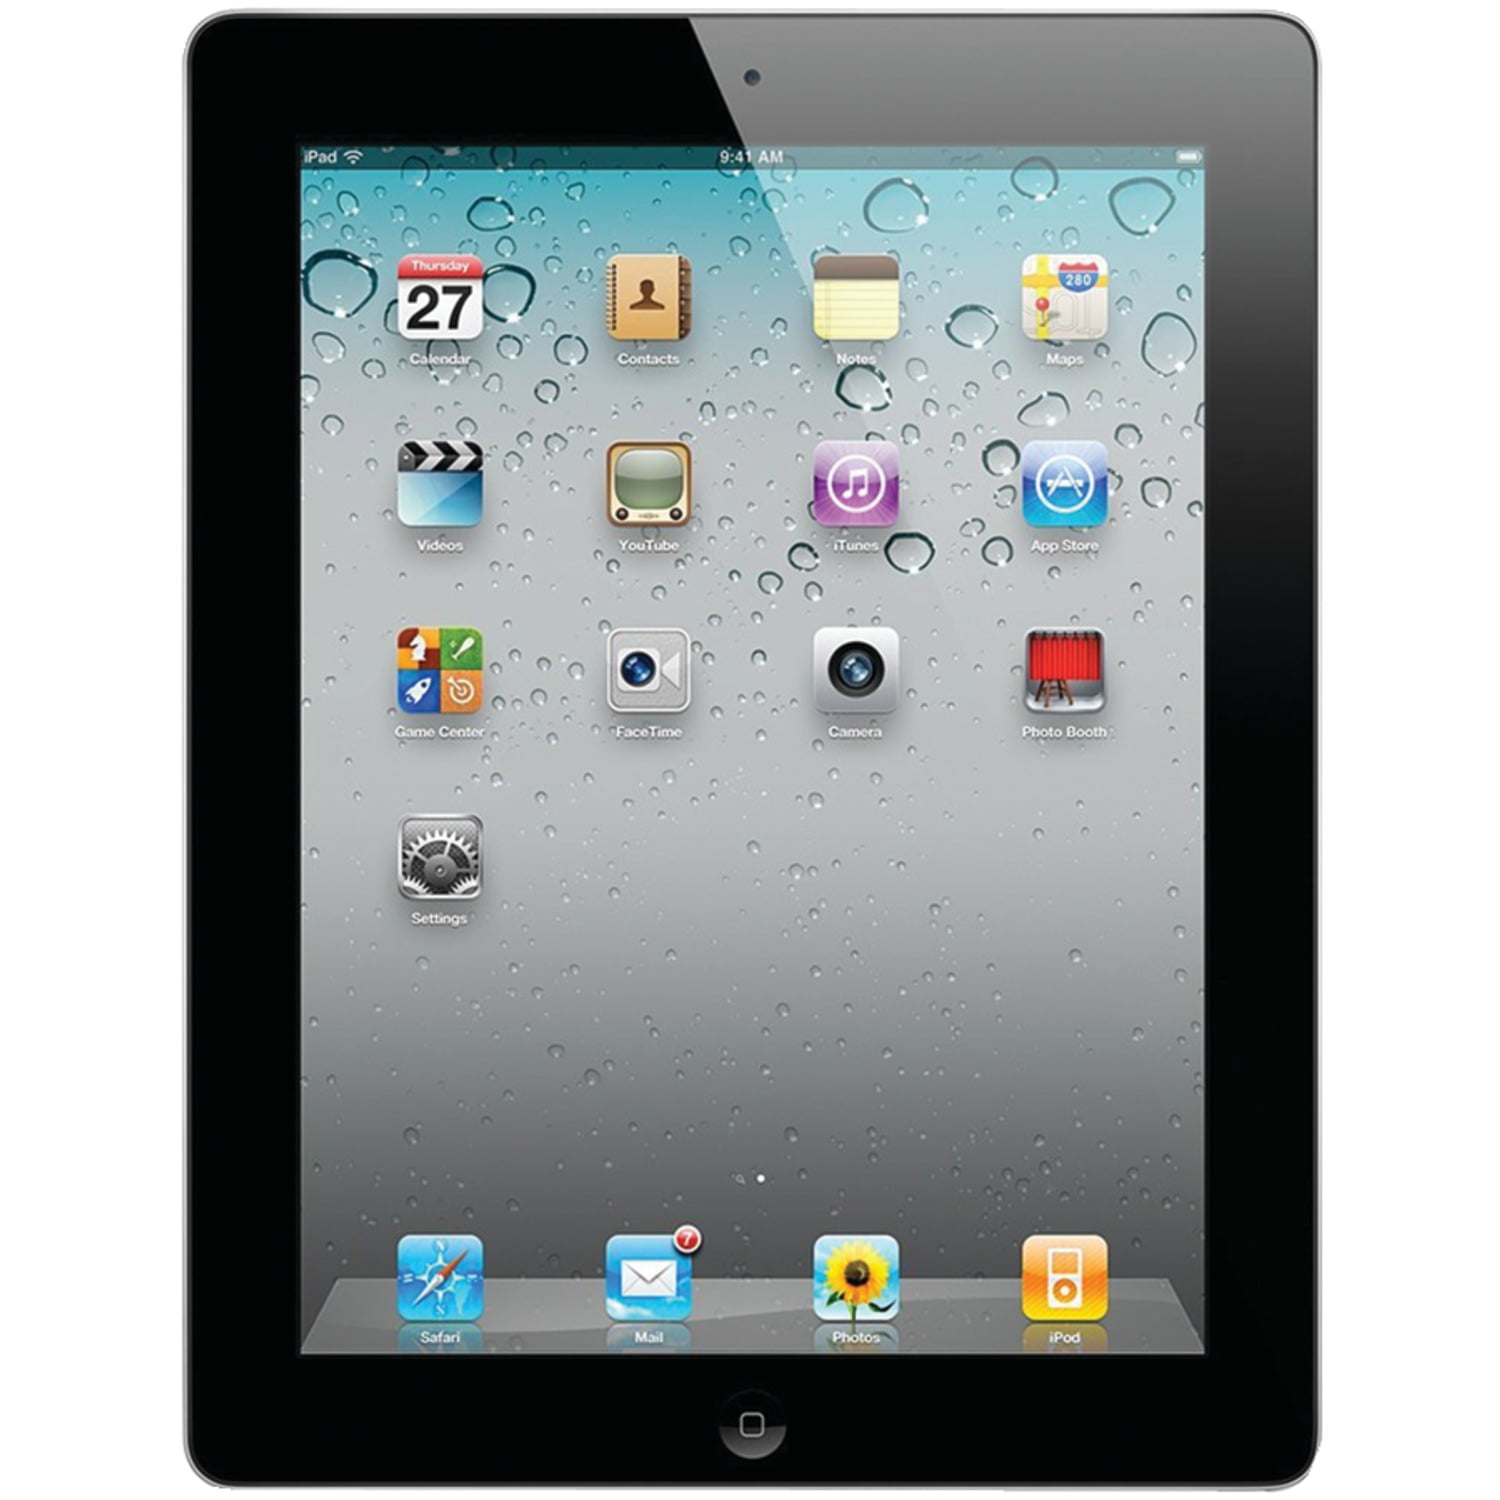 skrig Bagvaskelse absolutte Restored MP2 - Apple iPad 2 with Wi-Fi 16GB - Black (2nd generation) MC769  (Refurbished) - Walmart.com